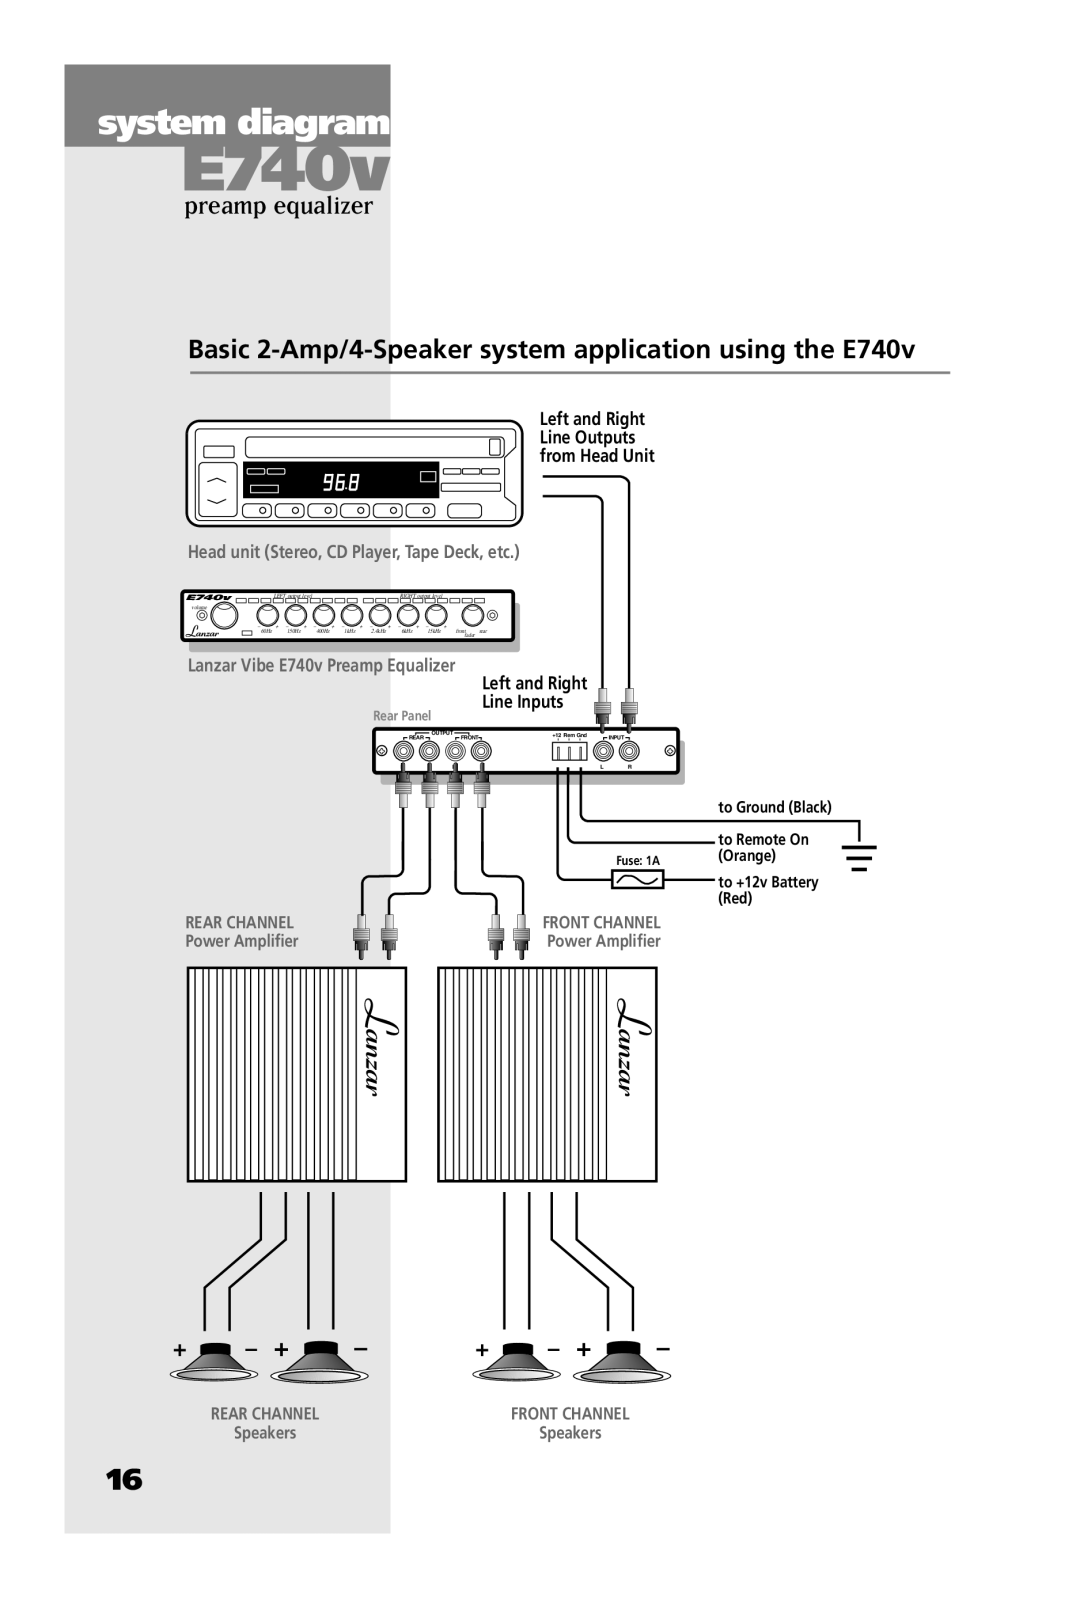 Lanzar Car Audio E750S system diagram, preamp equalizer, Head unit Stereo, CD Player, Tape Deck, etc, Line Inputs, Fuse 1A 